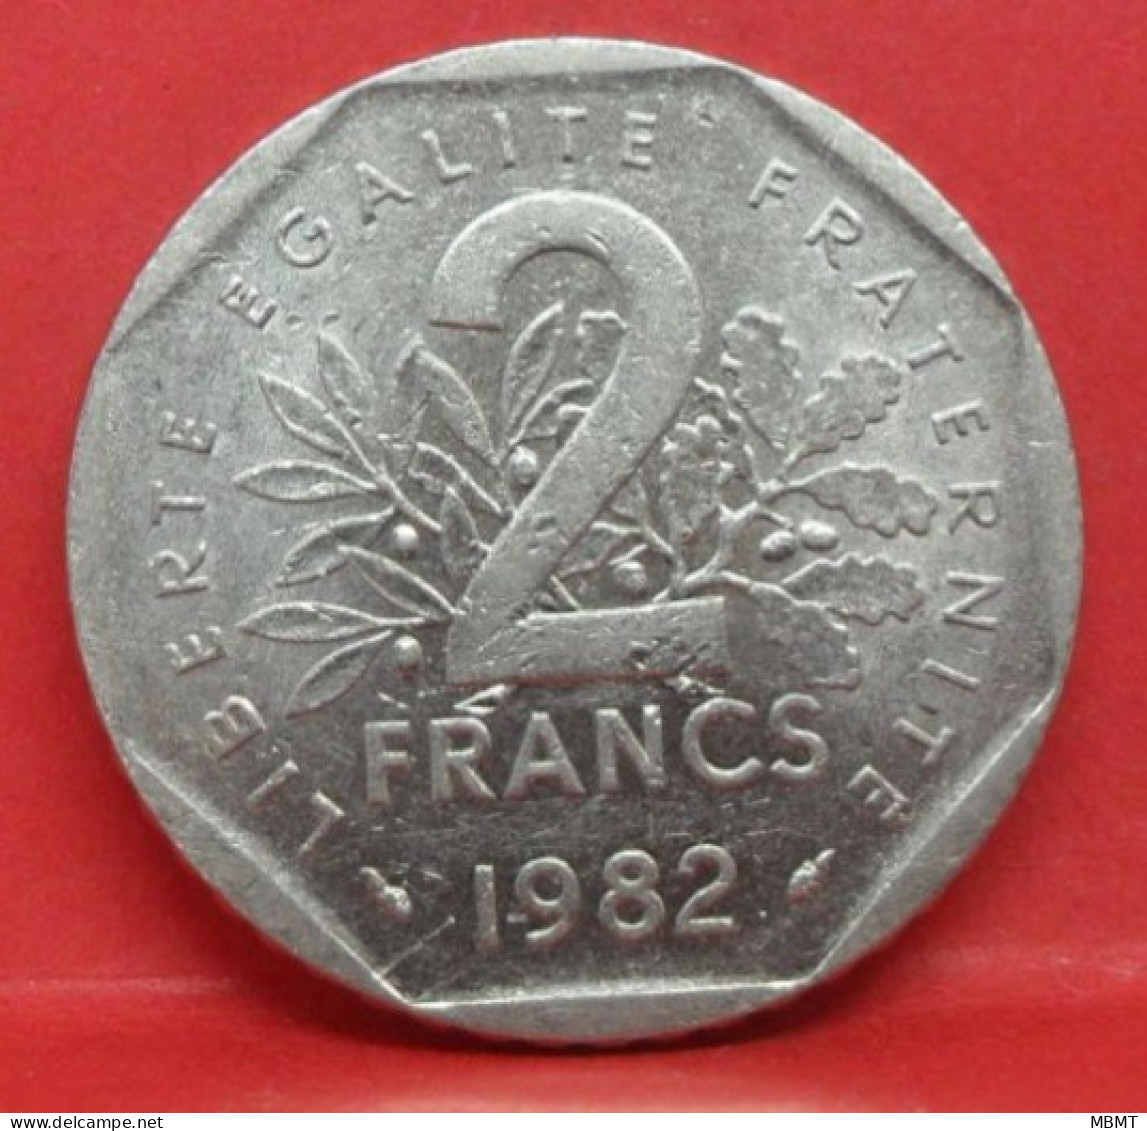 2 Francs Semeuse 1982 - TTB - Pièce Monnaie France - Article N°803 - 2 Francs